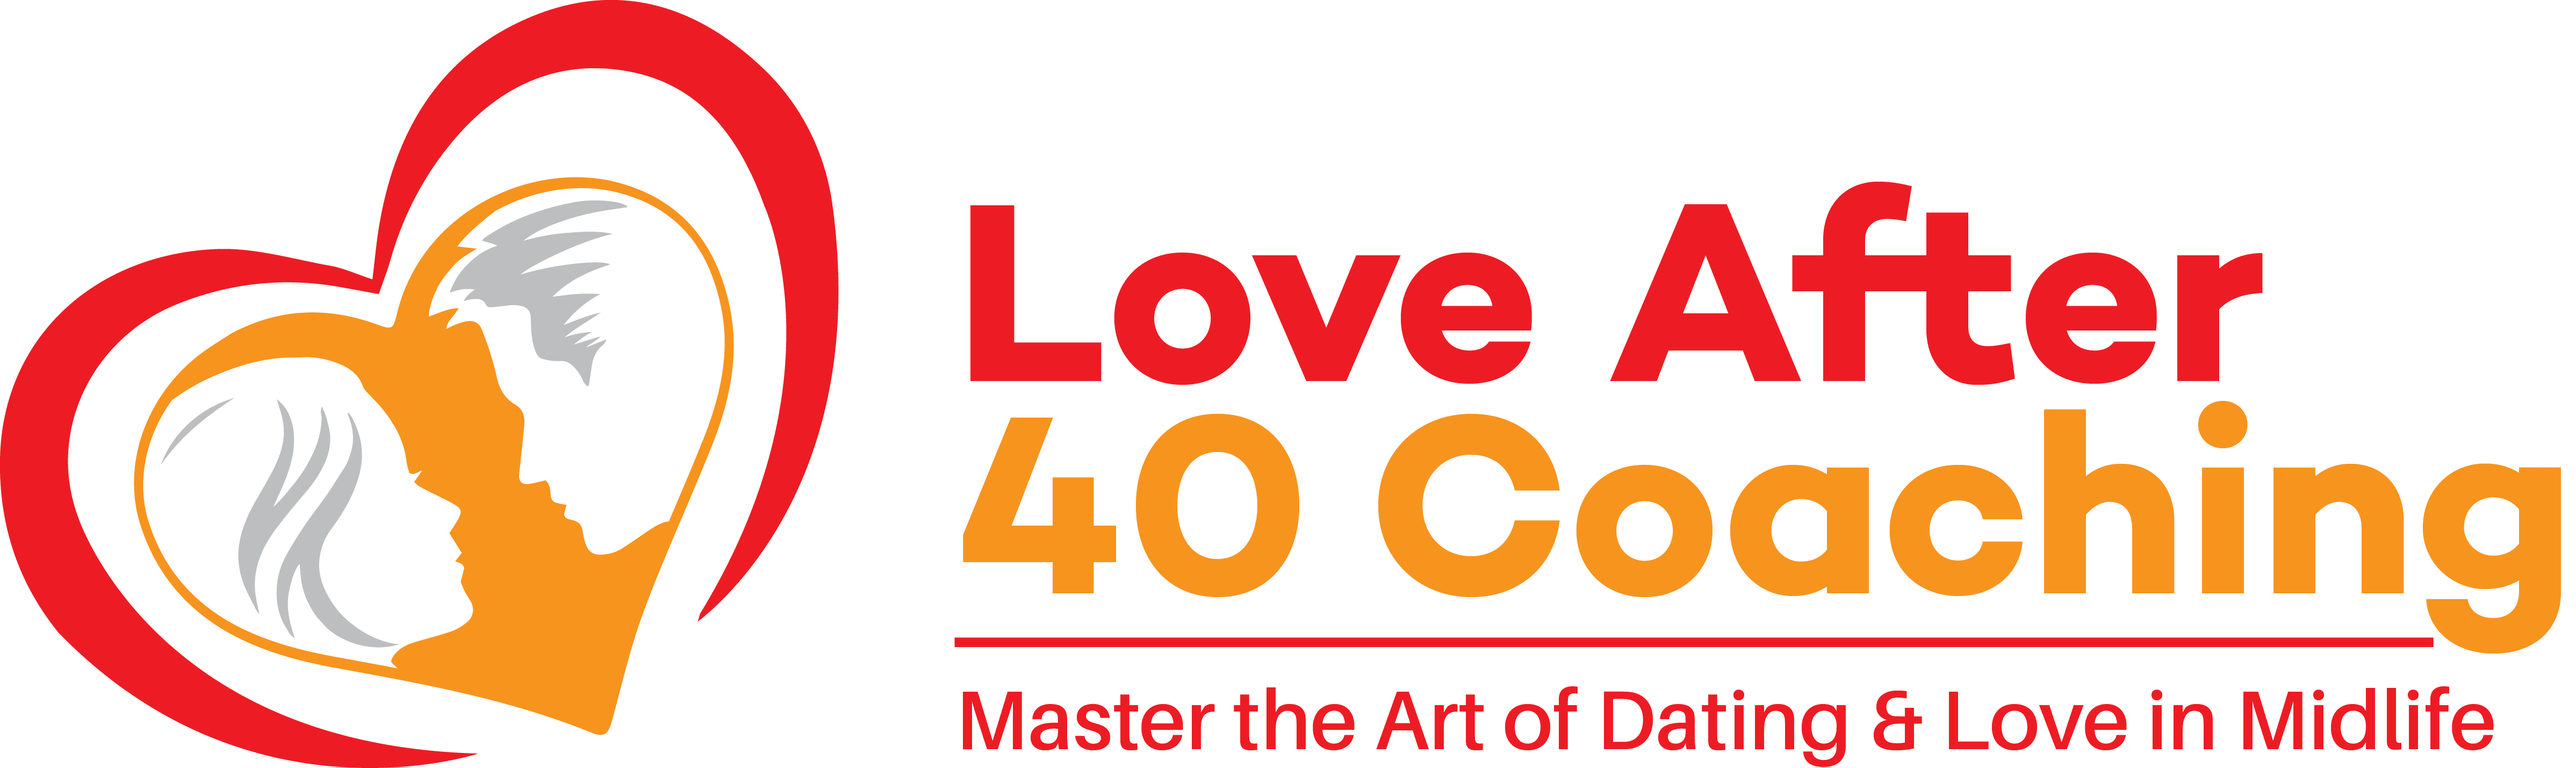 Love After 40 Coaching logo